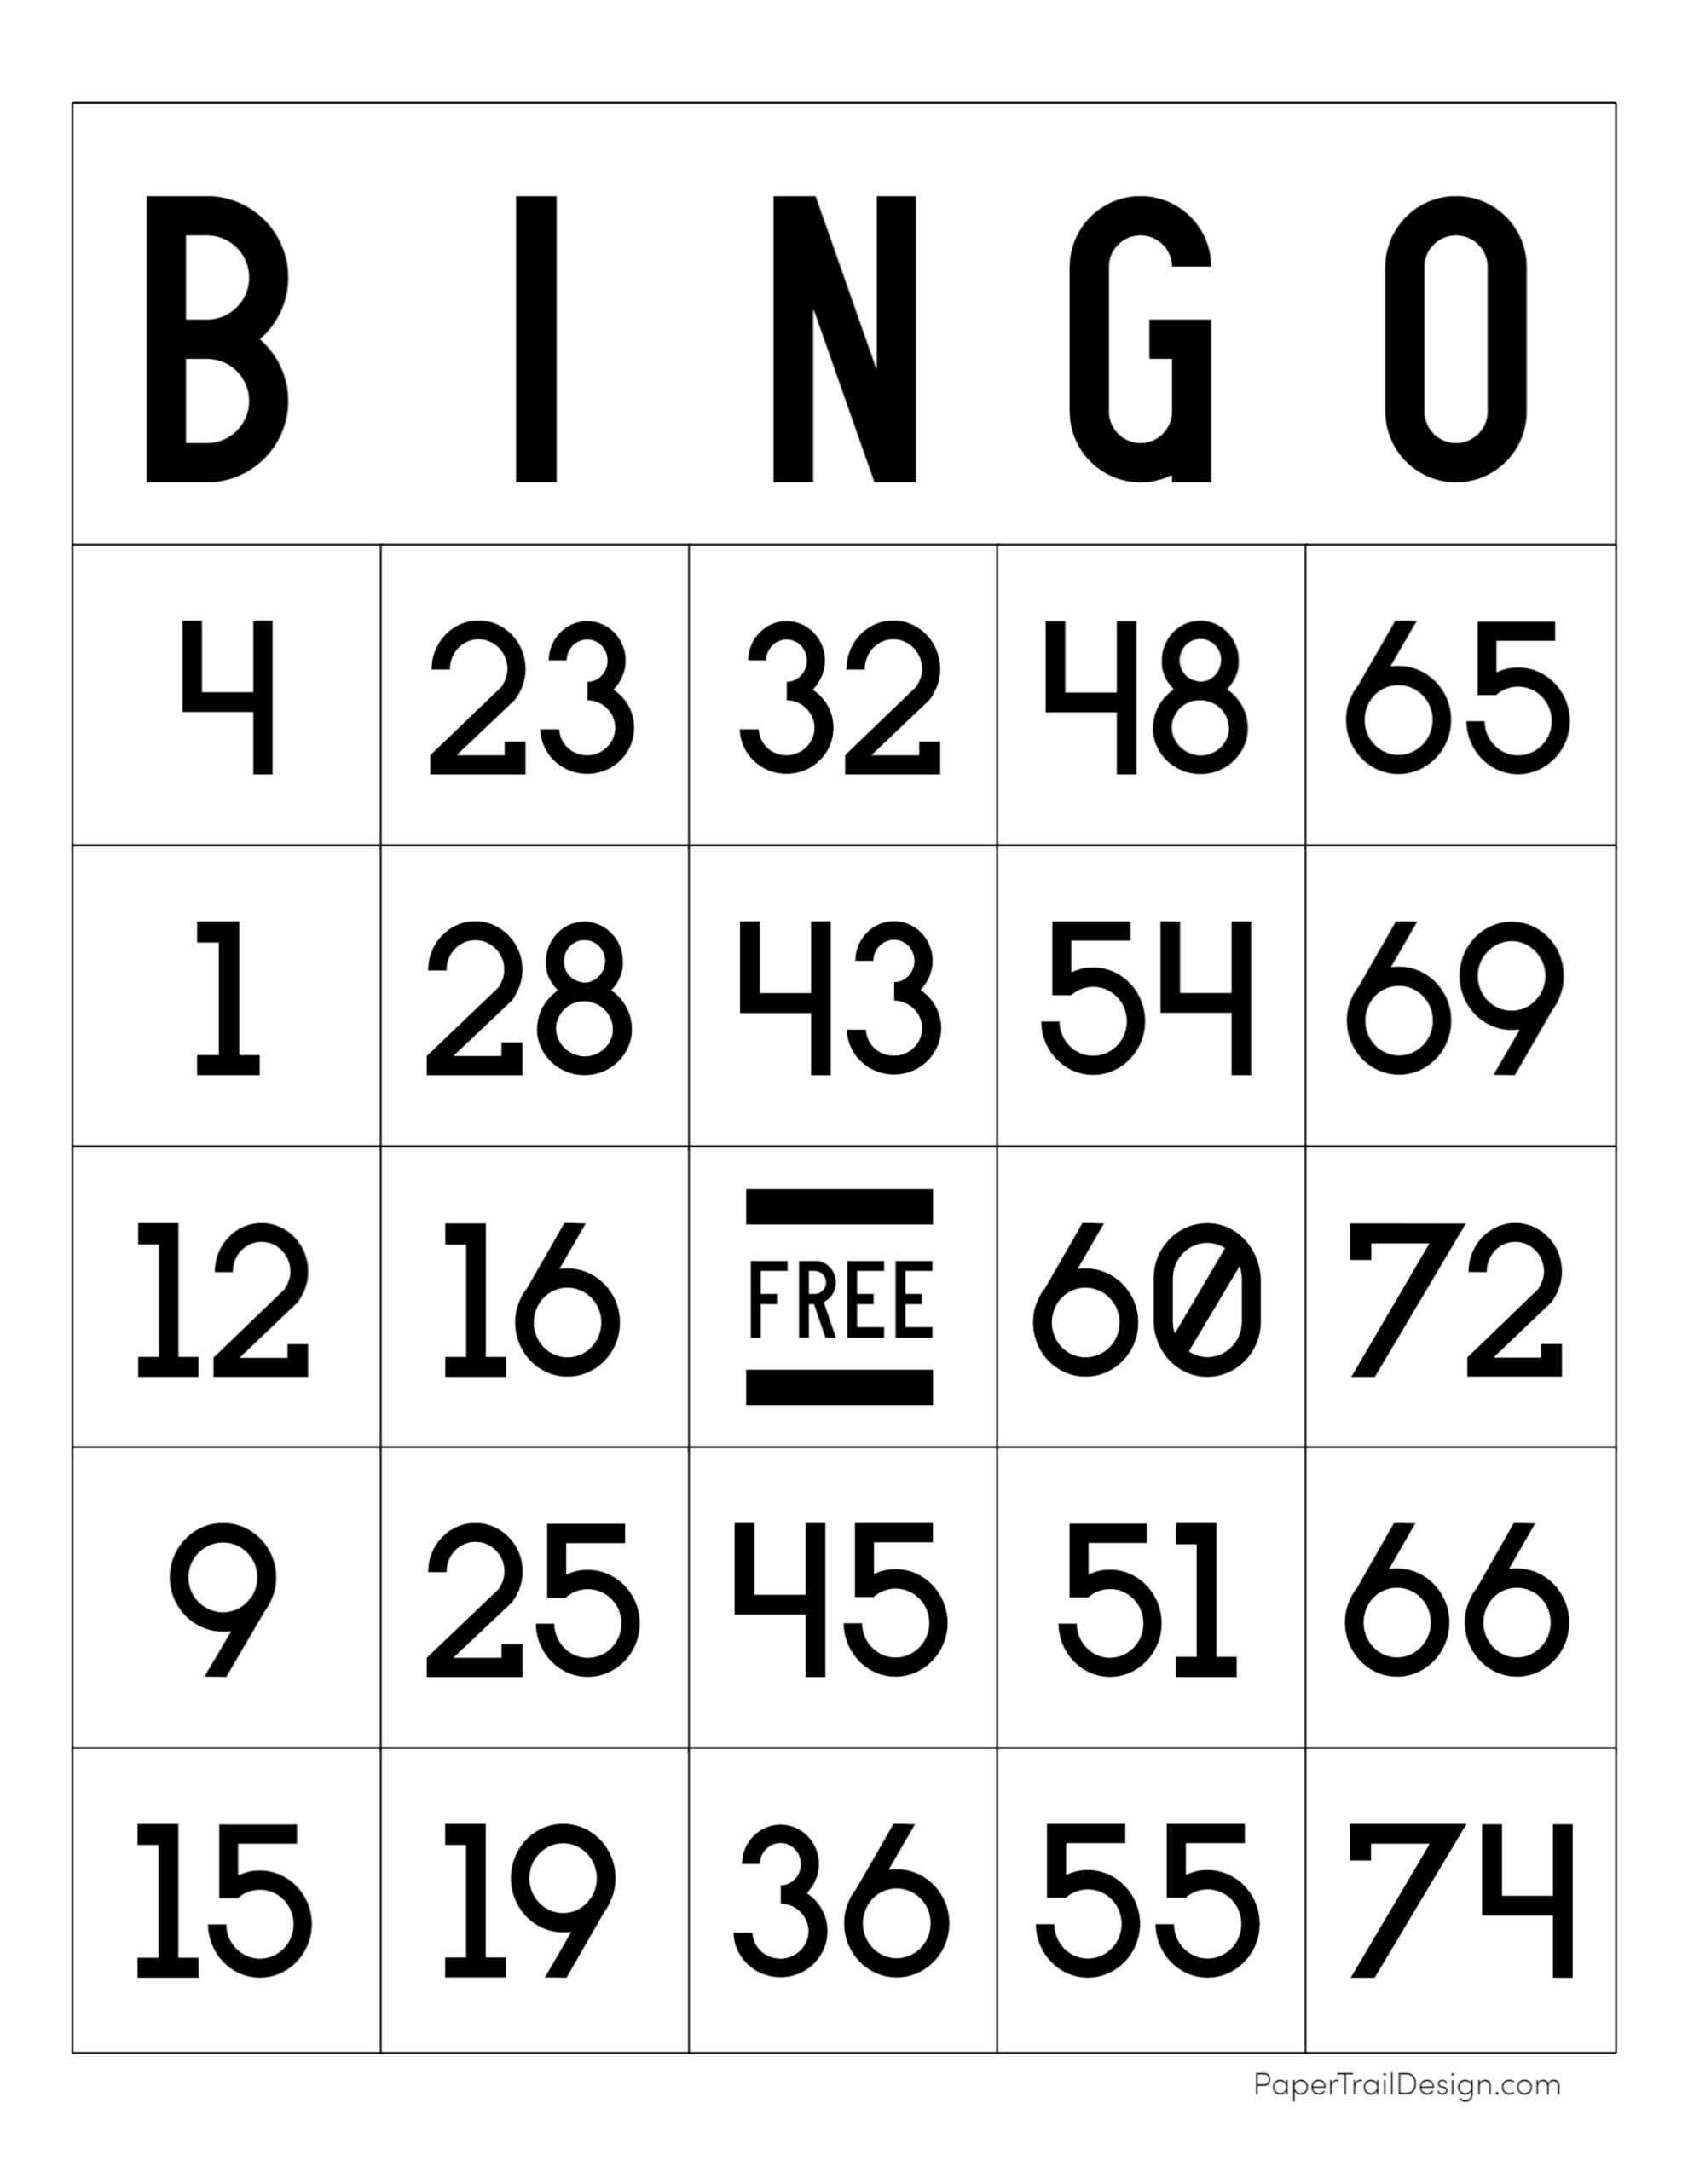 free-printable-bingo-cards-paper-trail-design-swiss-sensing